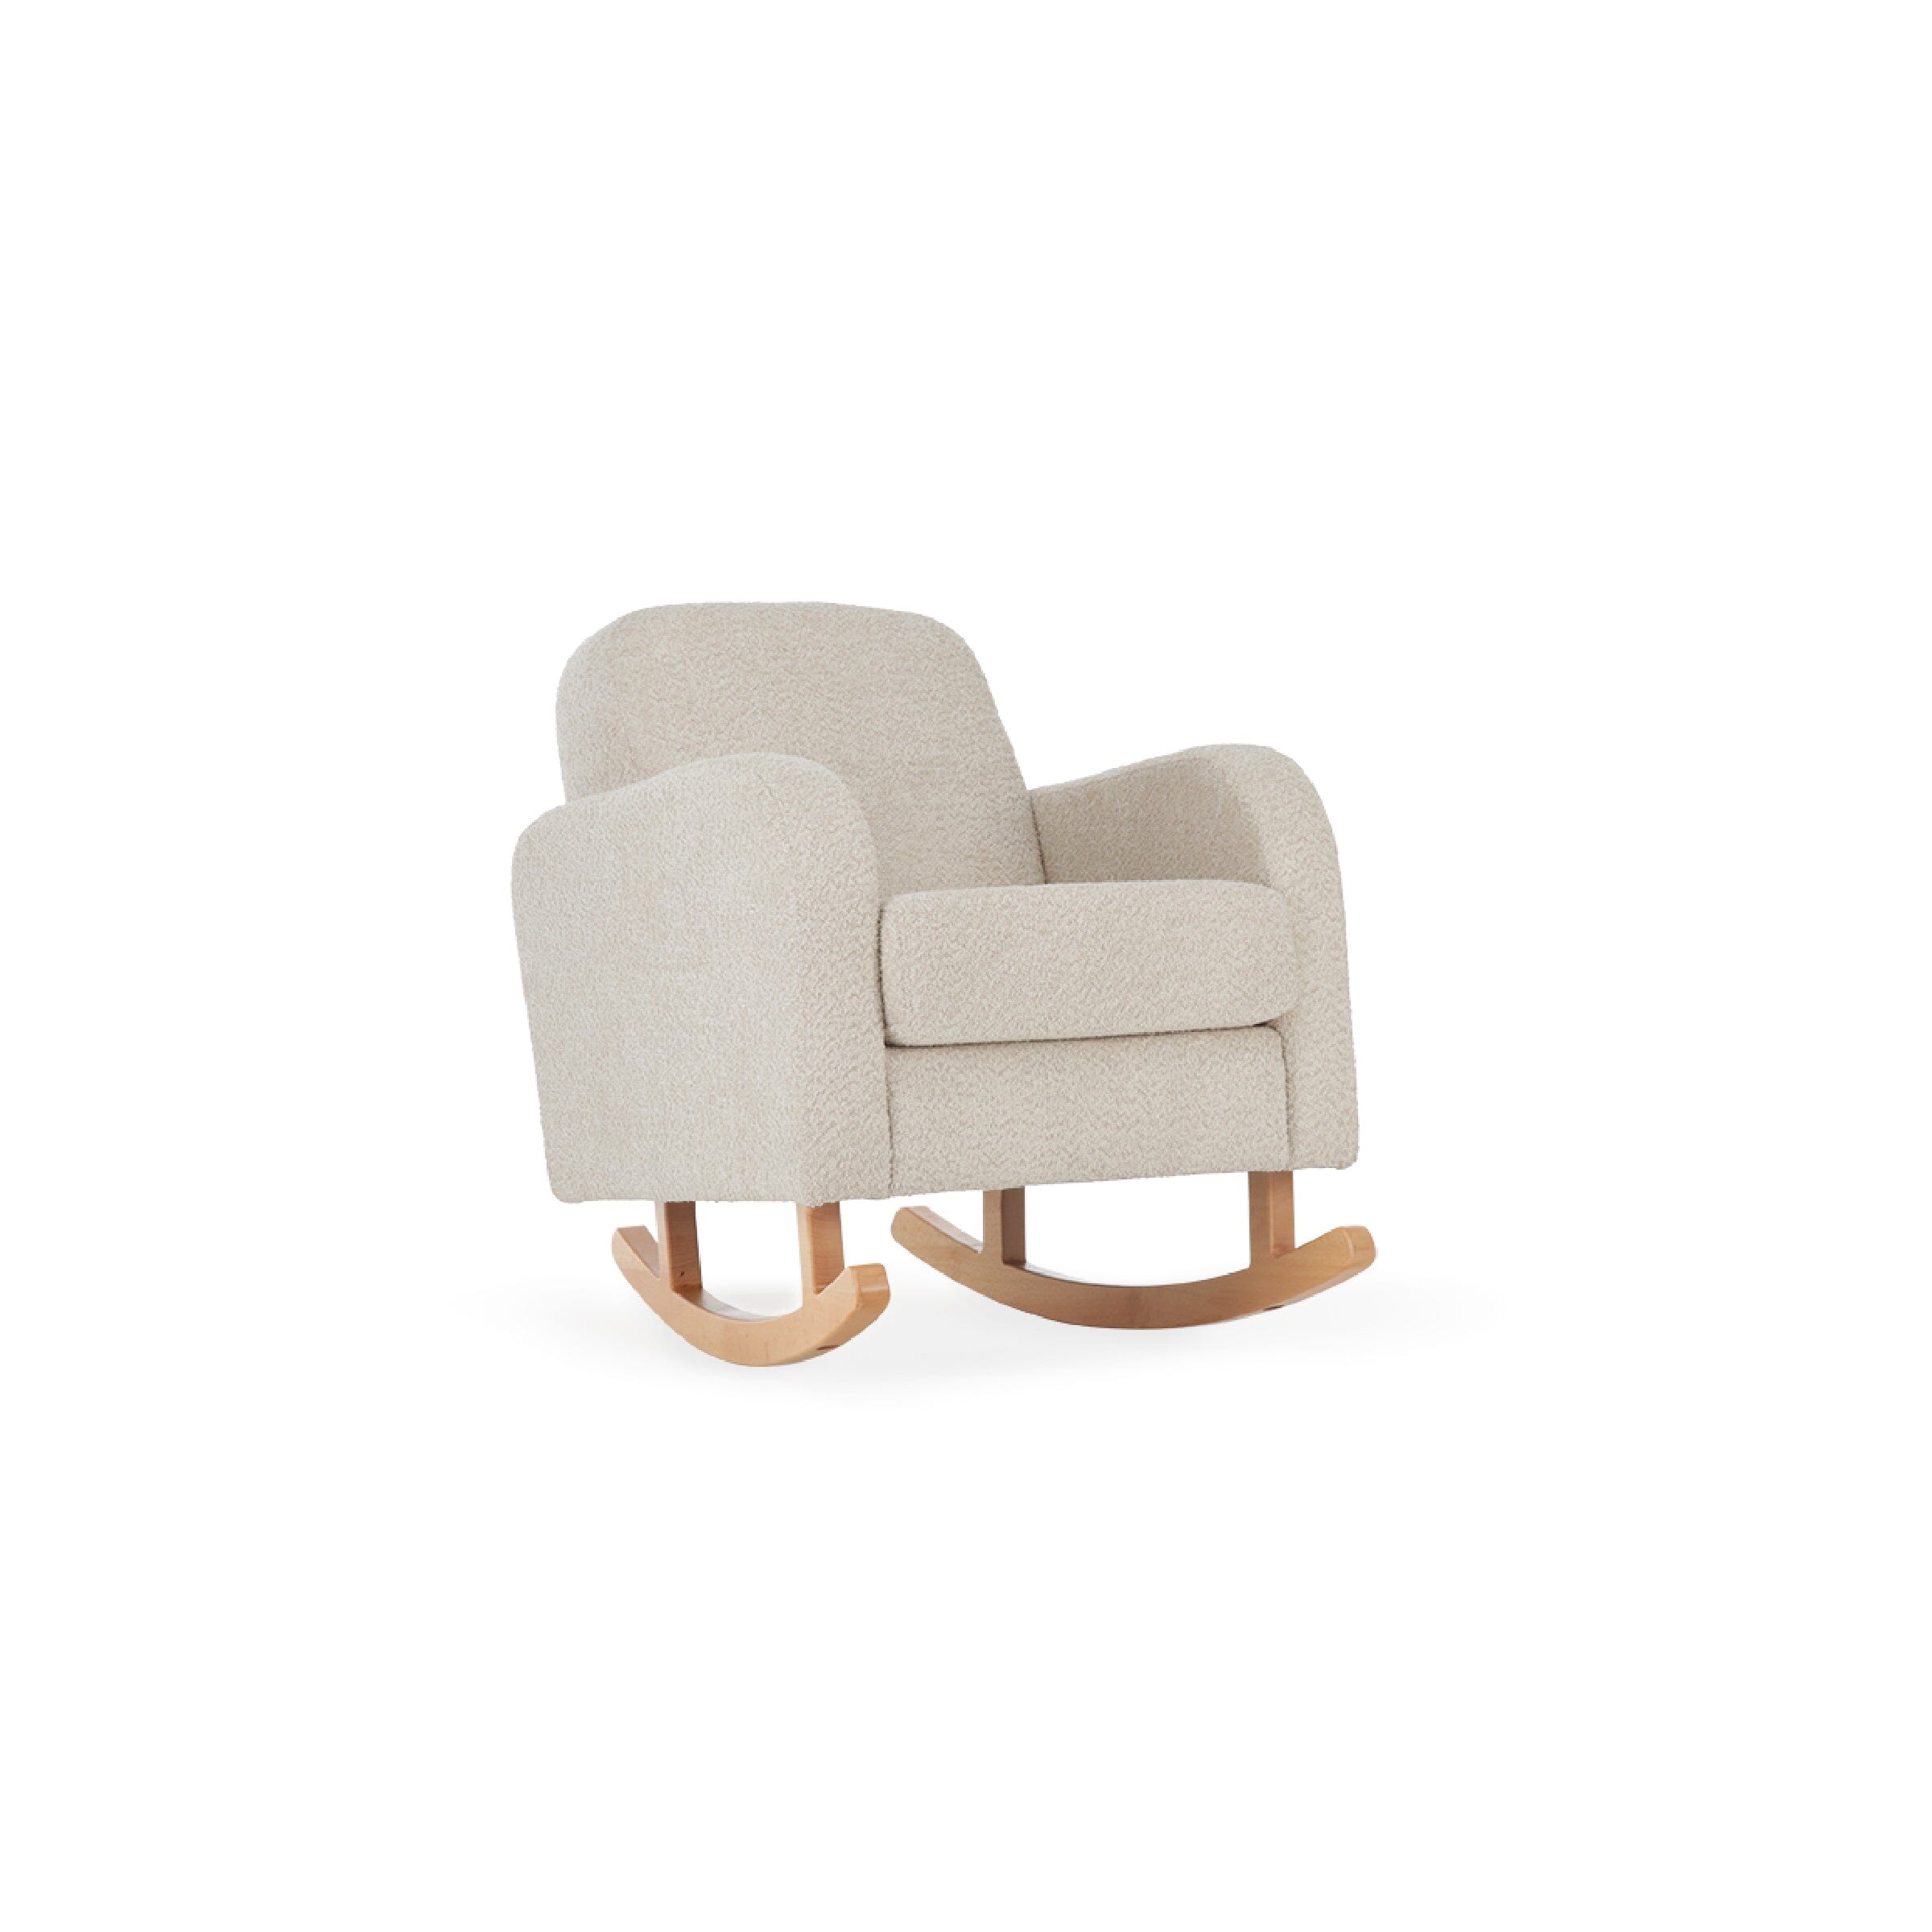 Etta Boucle Nursing Chair - Mushroom Furniture Singles CuddleCo 